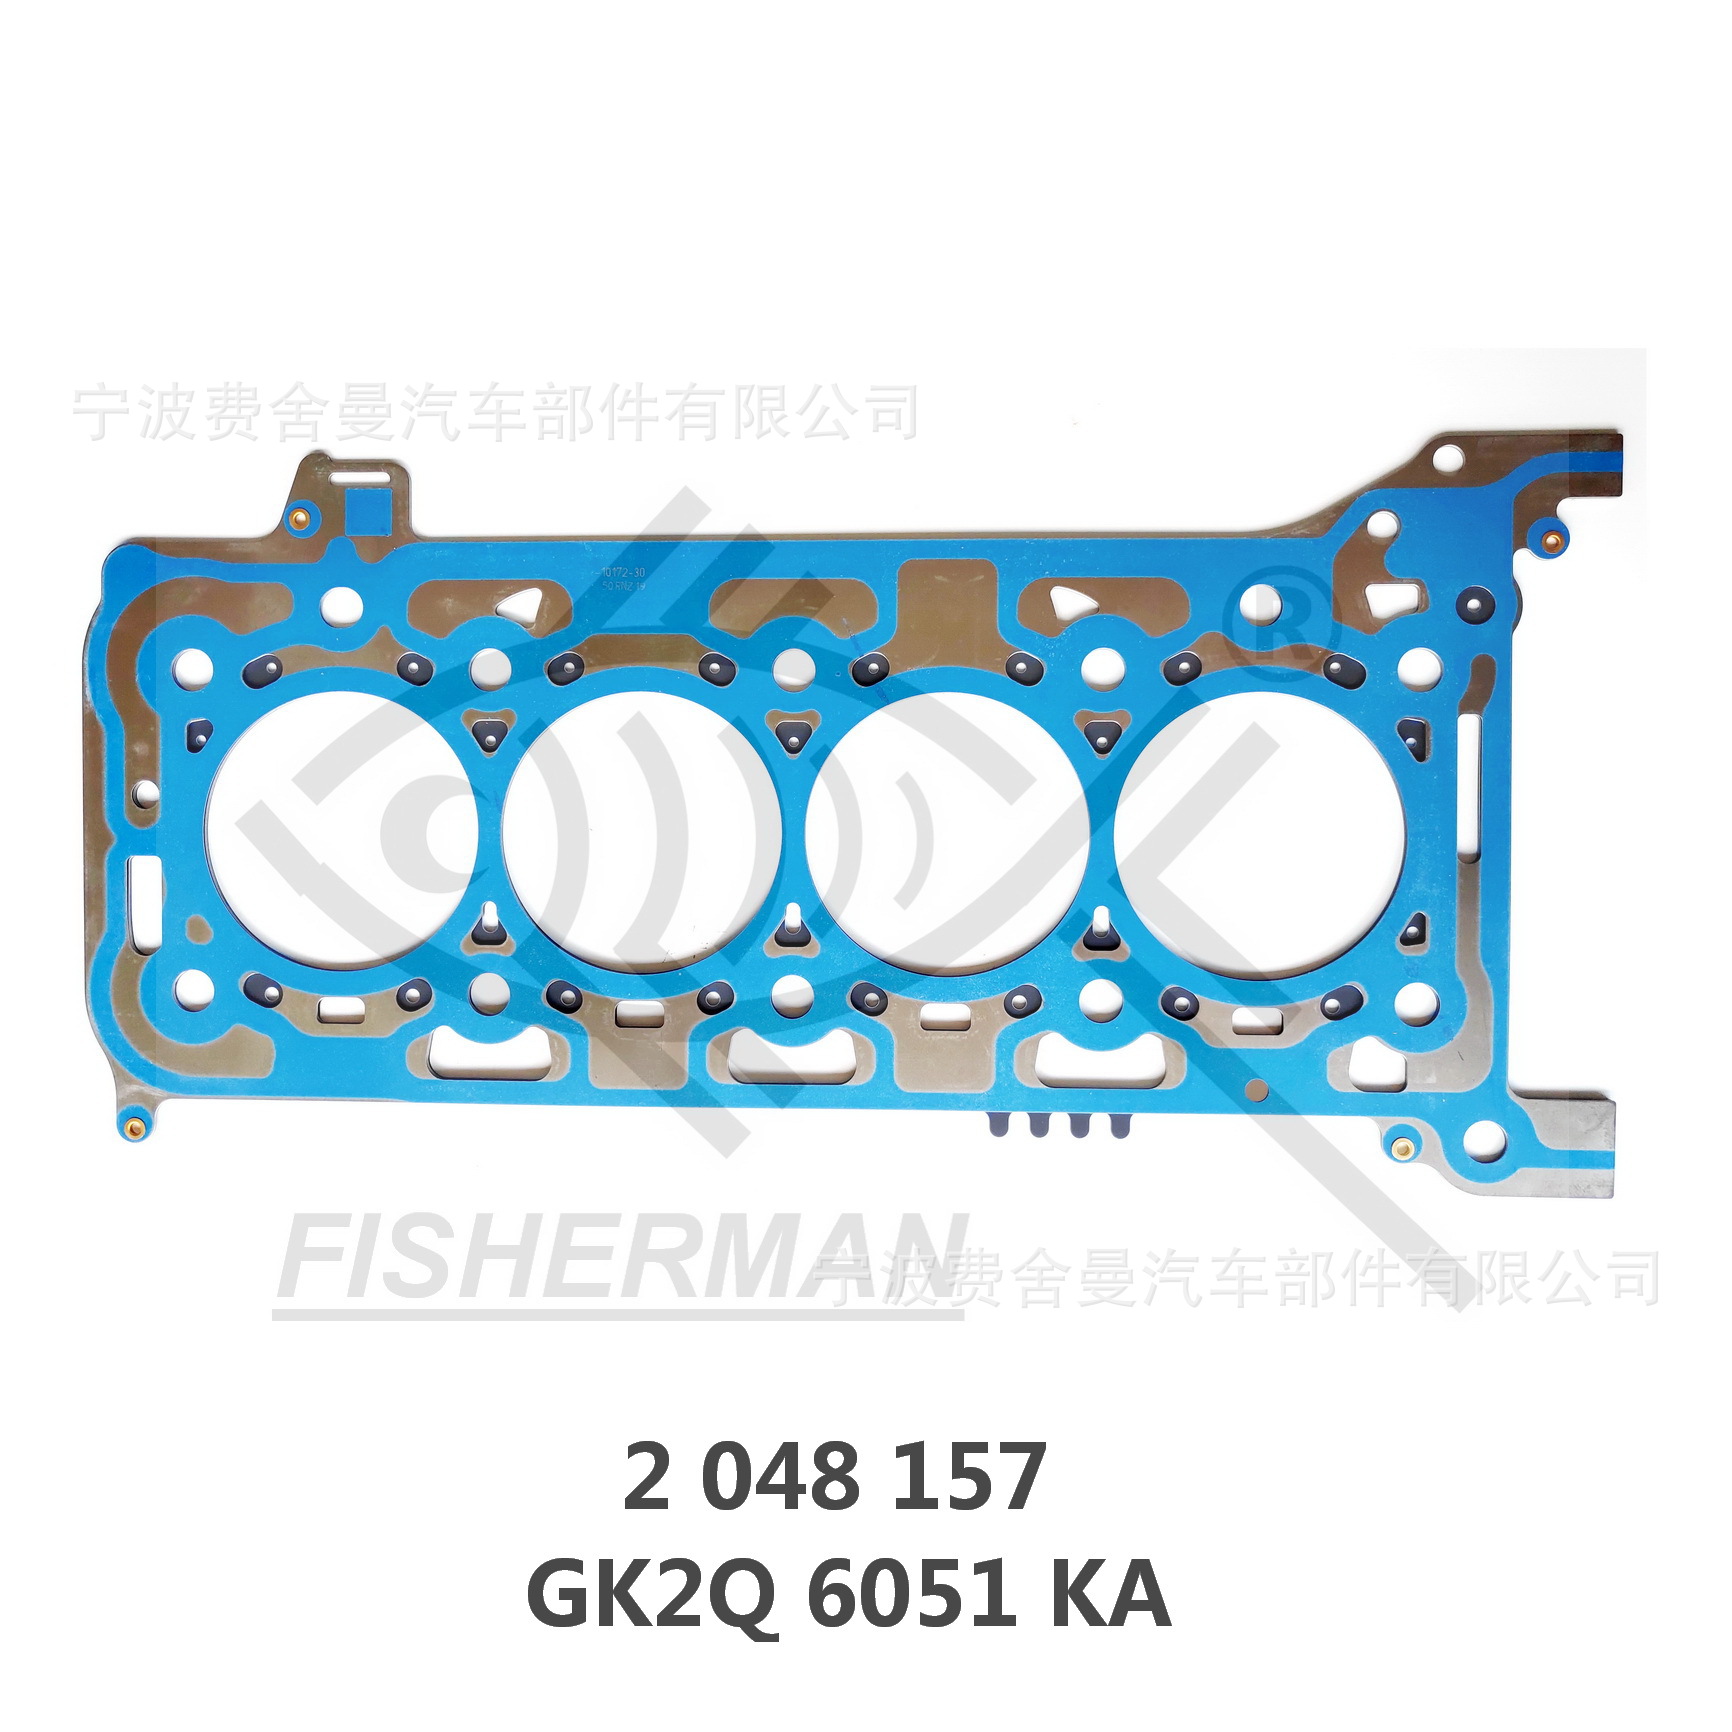 Applicable Ford 2.0 TDCi diesel oil Cylinder Head Gasket 2048157 GK2Q6051KA